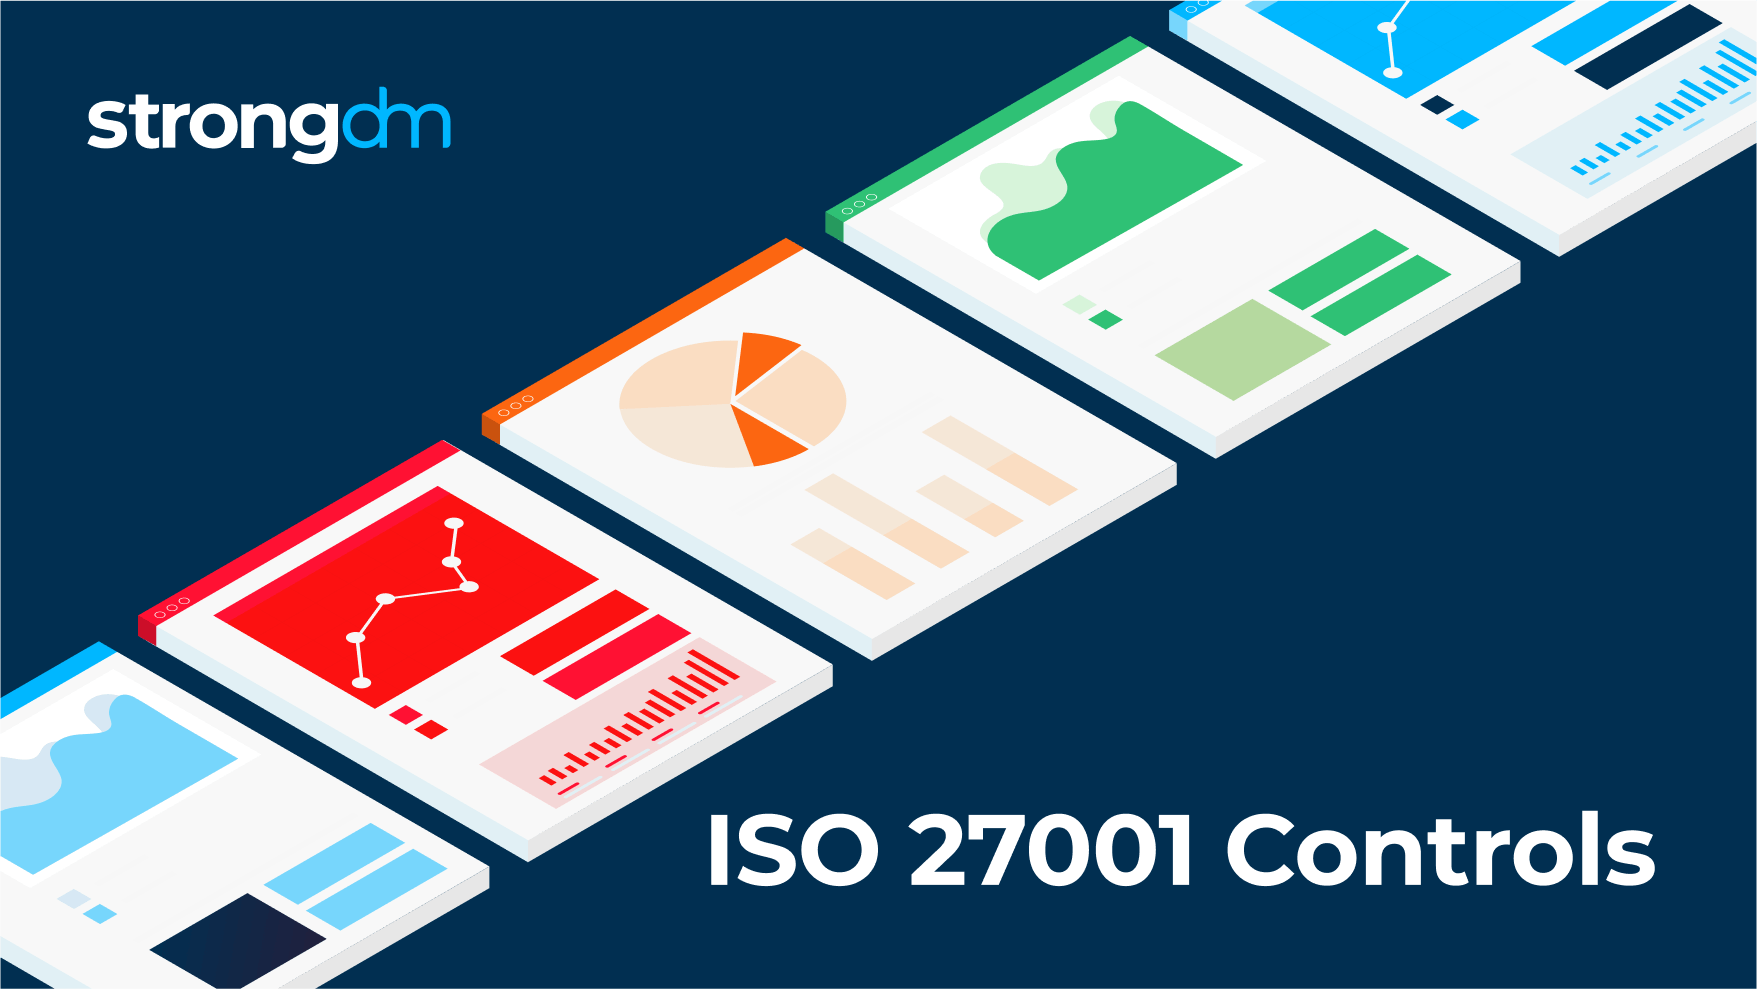 ISO 27001 Controls